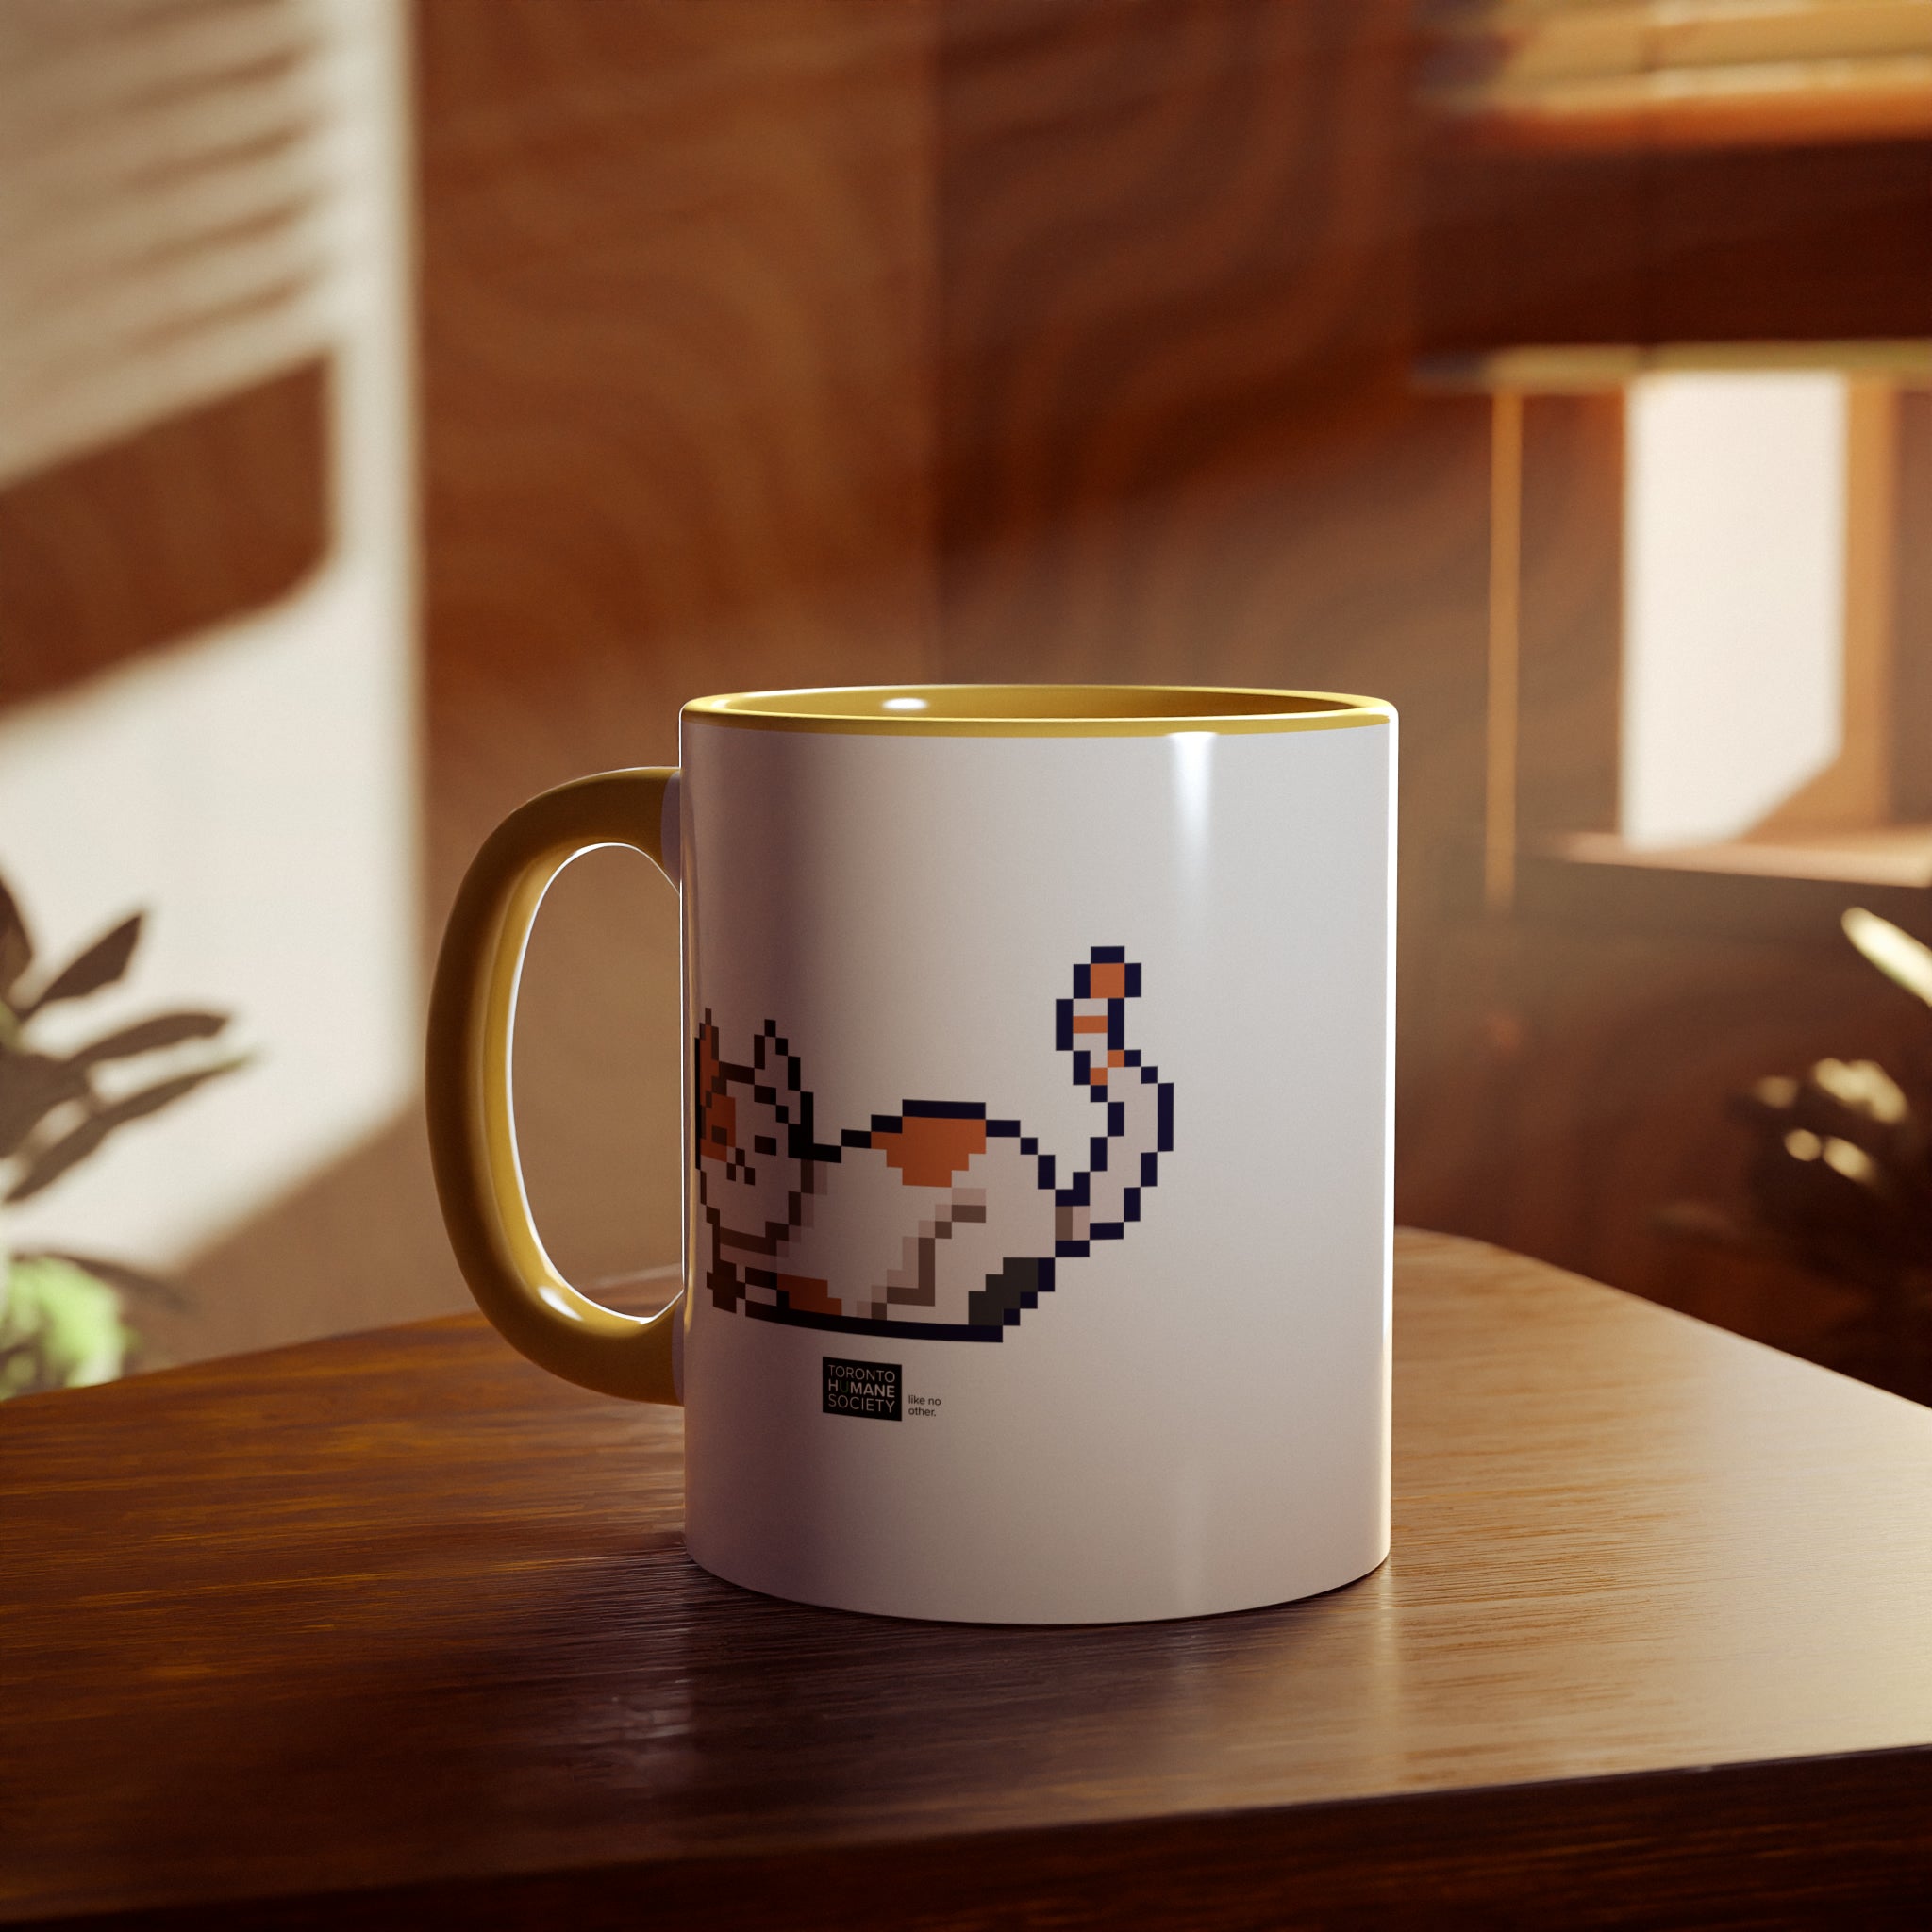 Mug - Pixelated cat